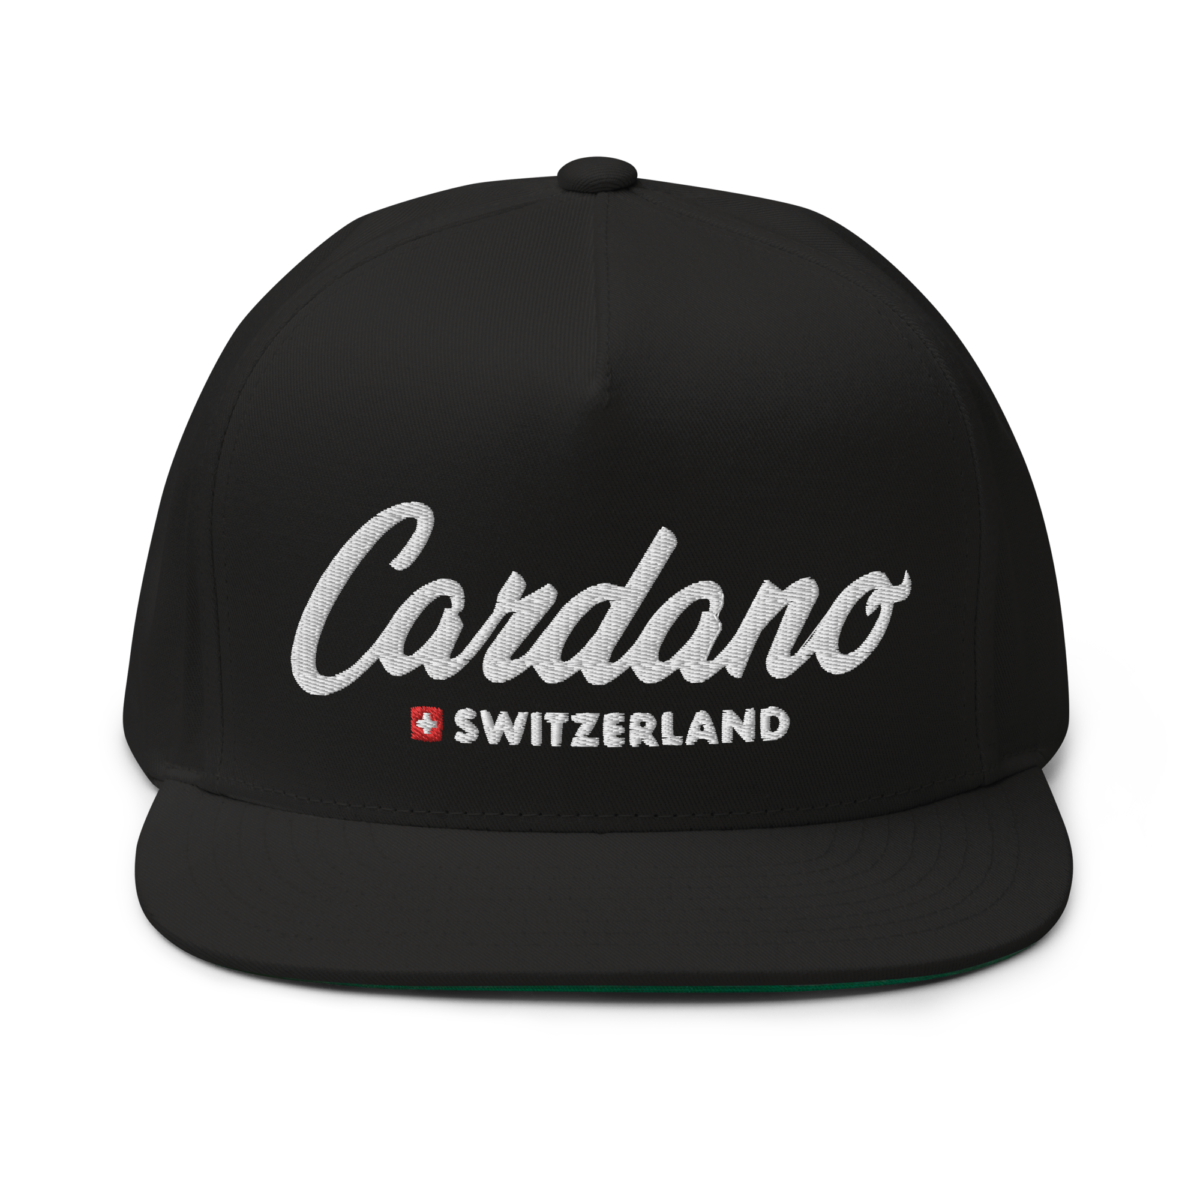 flat bill cap black front 63a21ad1d0aa7 - Cardano Switzerland Snapback Hat